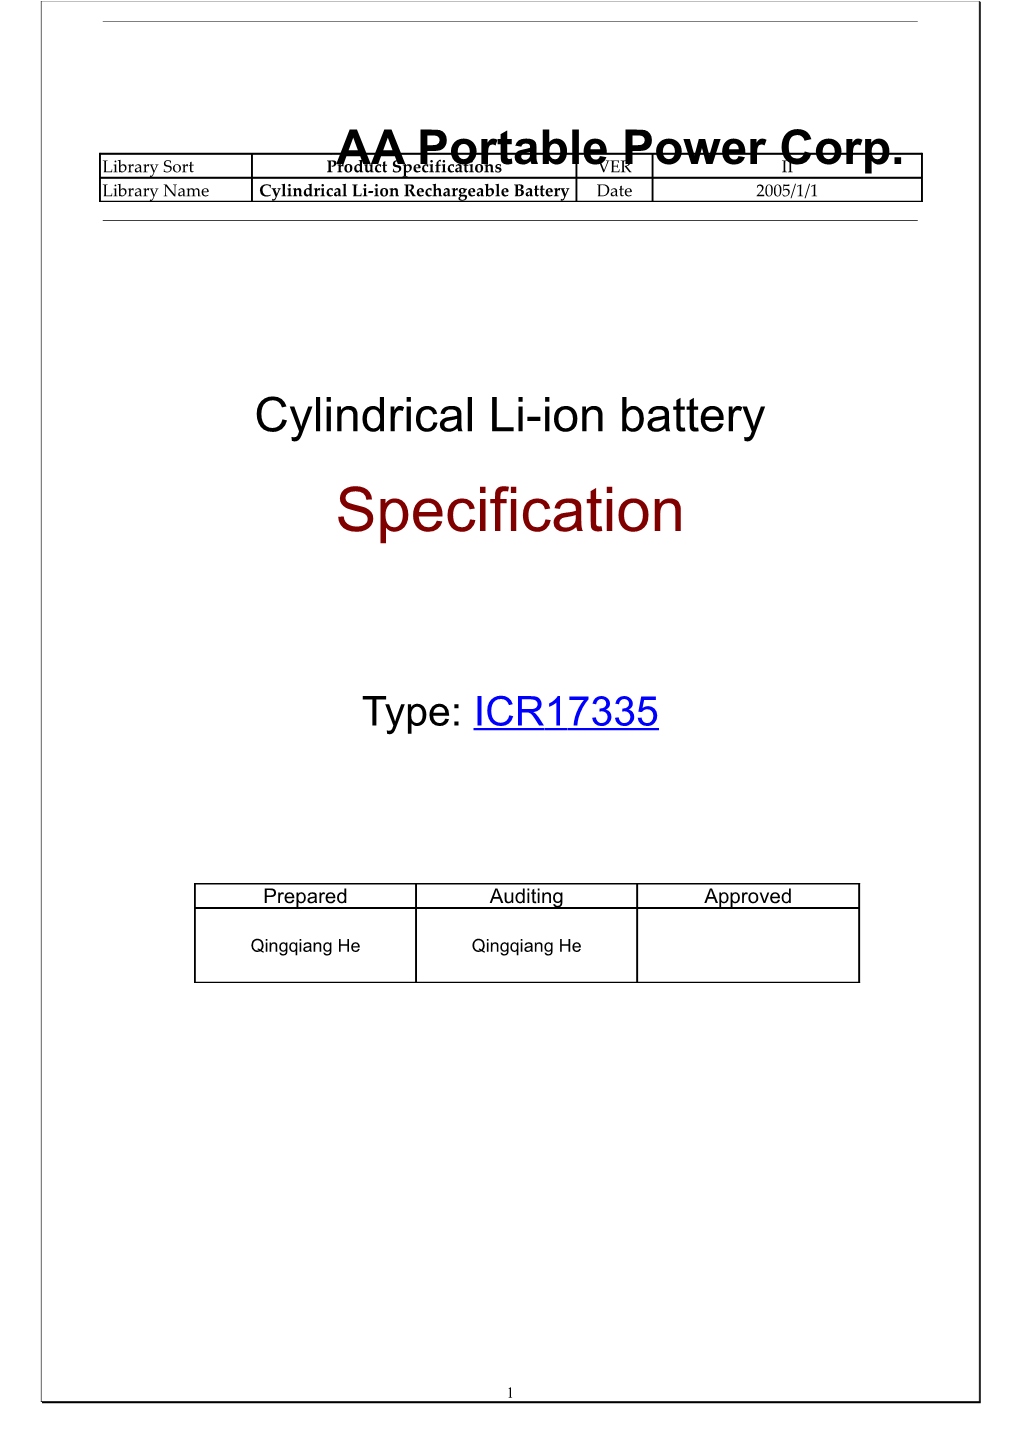 Cylindrical Li-Ion Battery